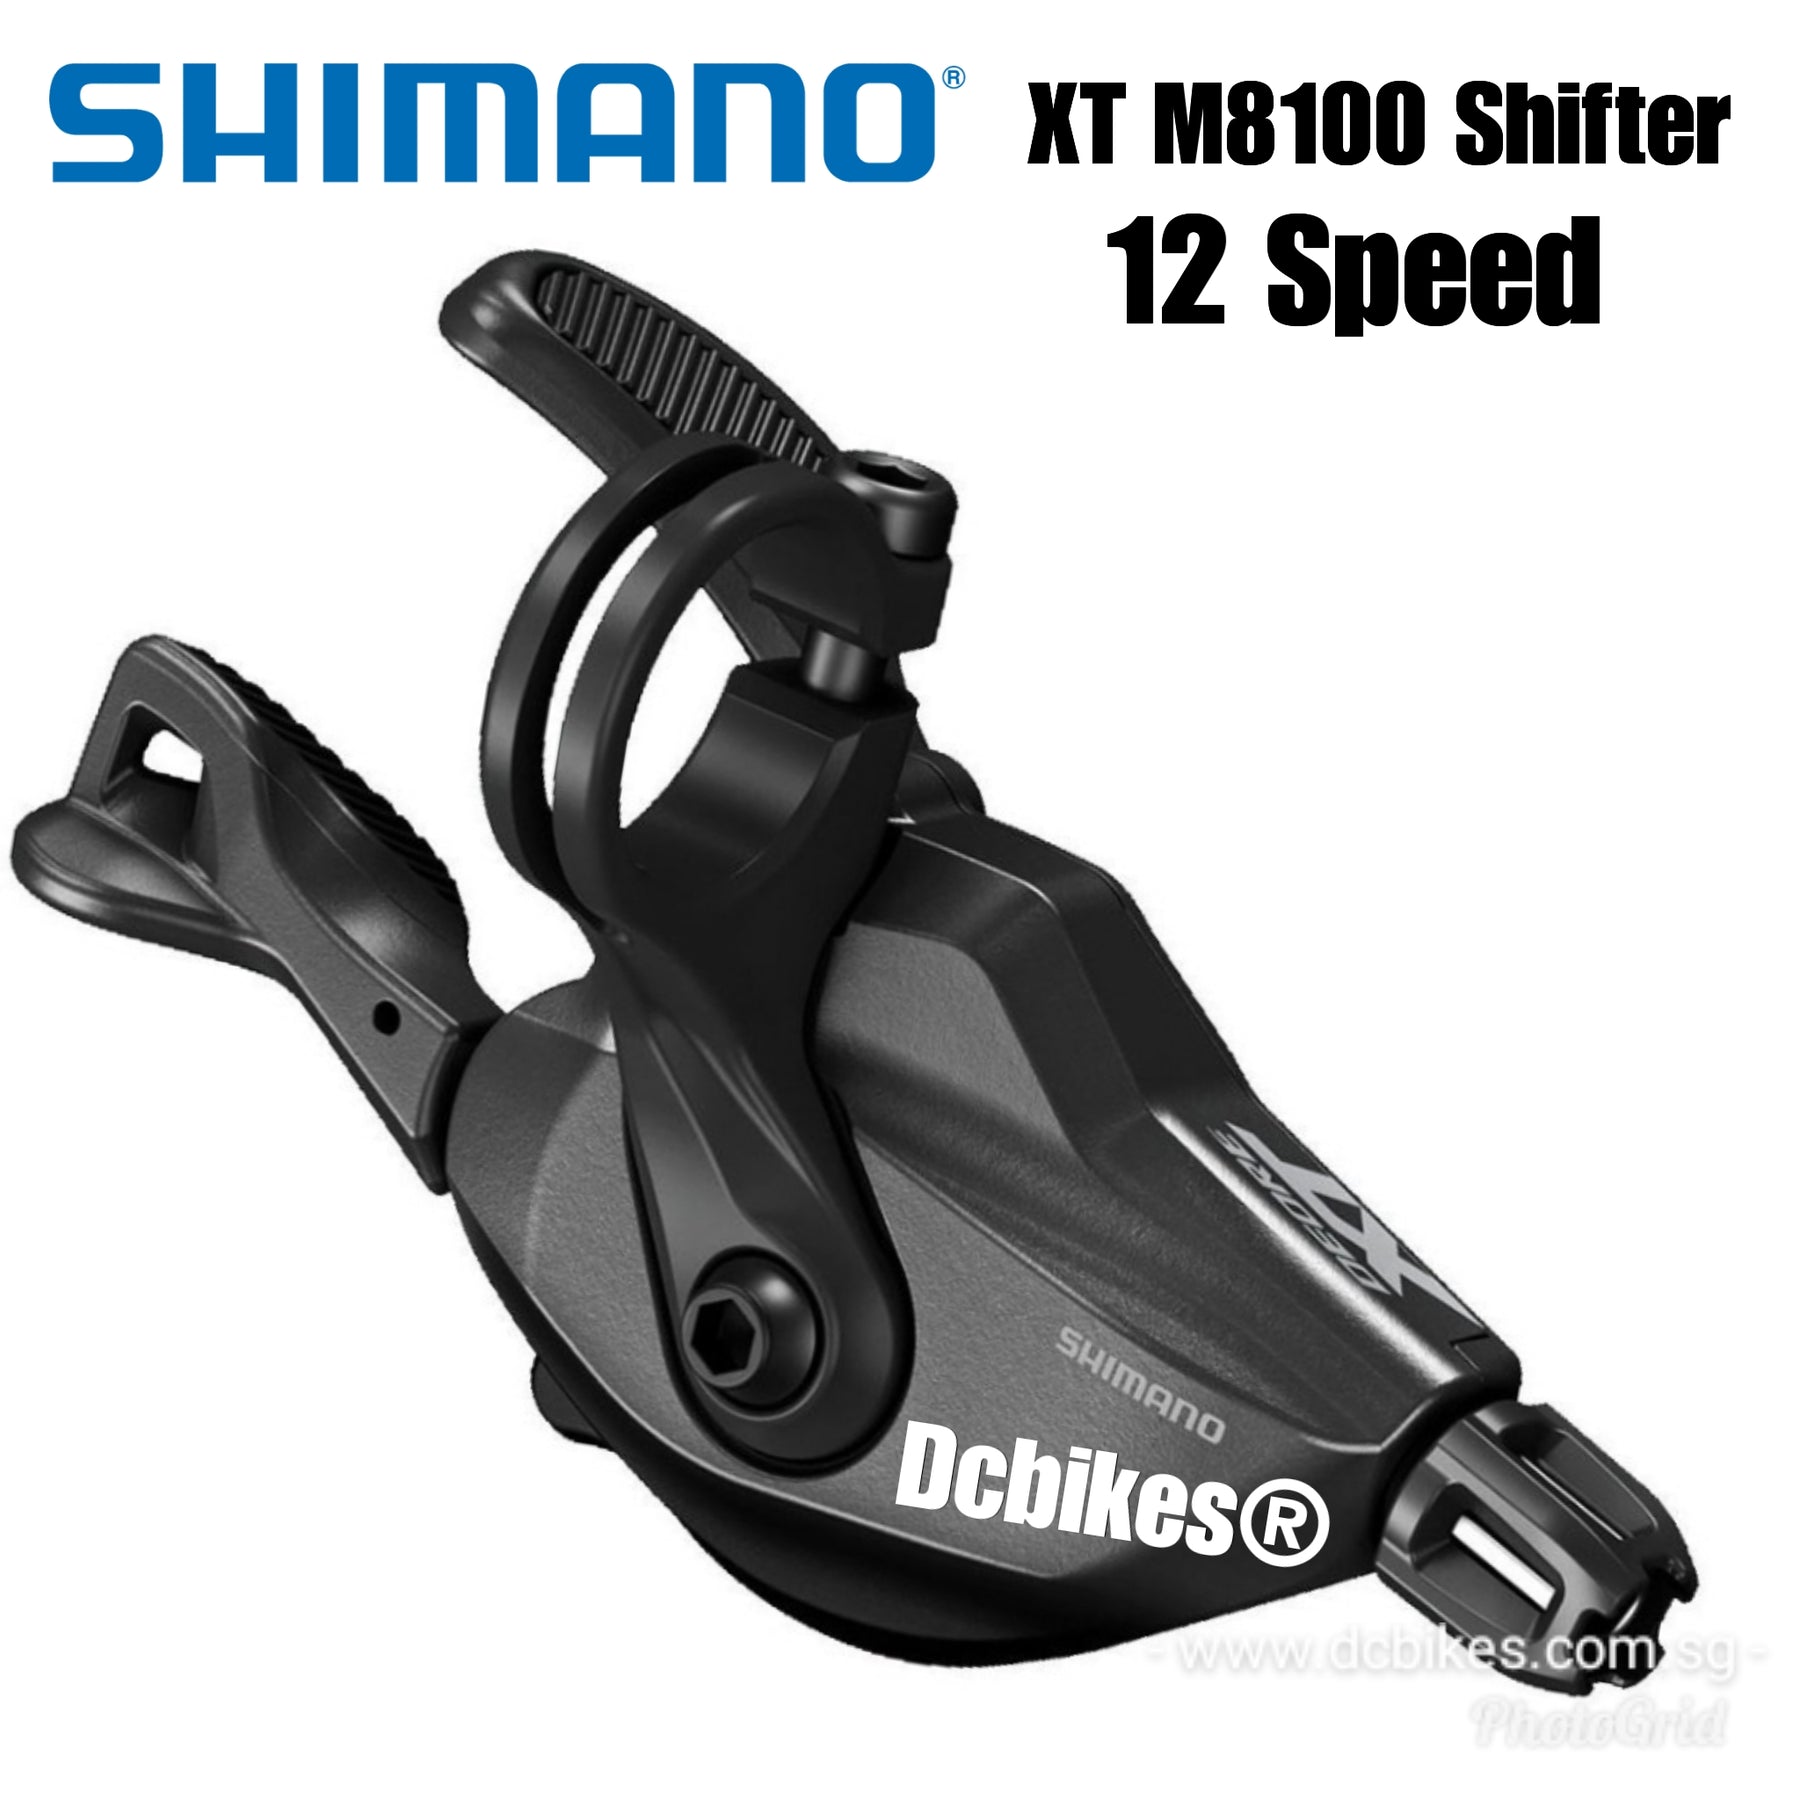 shimano xt m8100 12 speed shifter